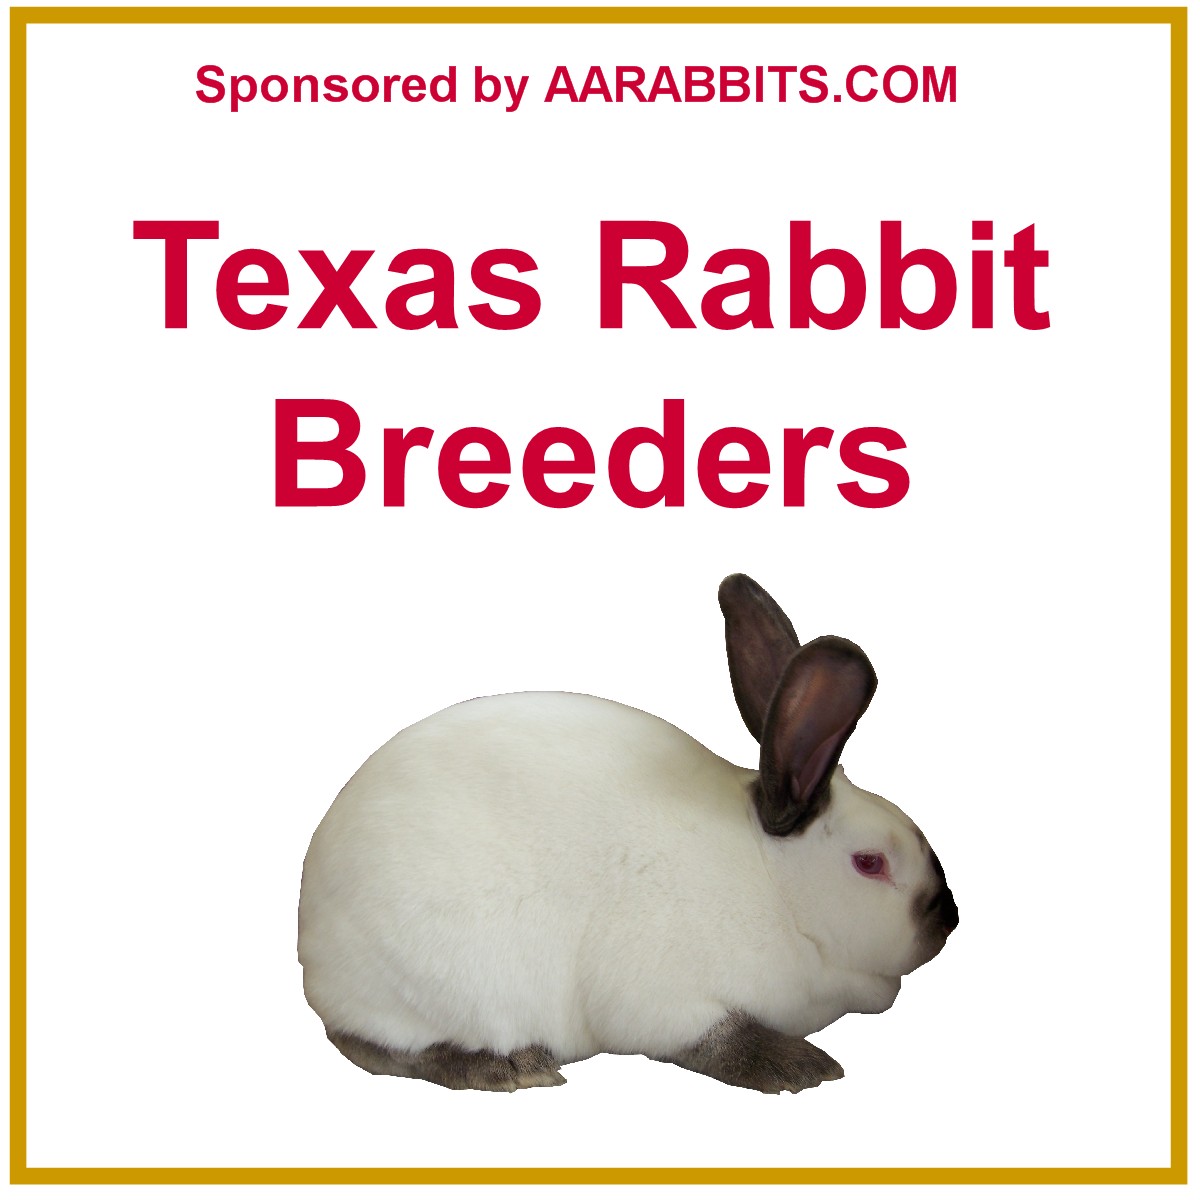 Texas Rabbit Breeders